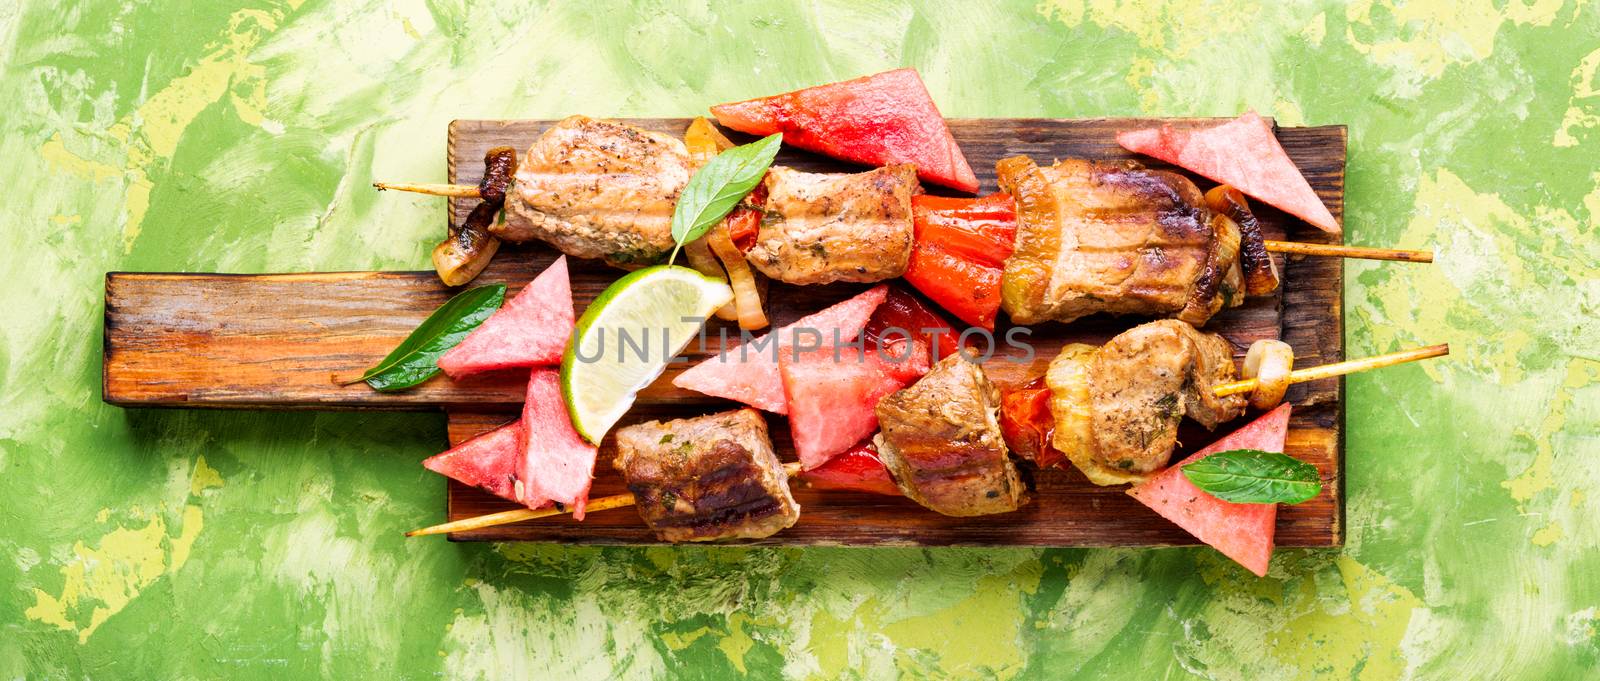 Meat, shish kebab on skewers with watermelon. Summer recipe for shish kebab